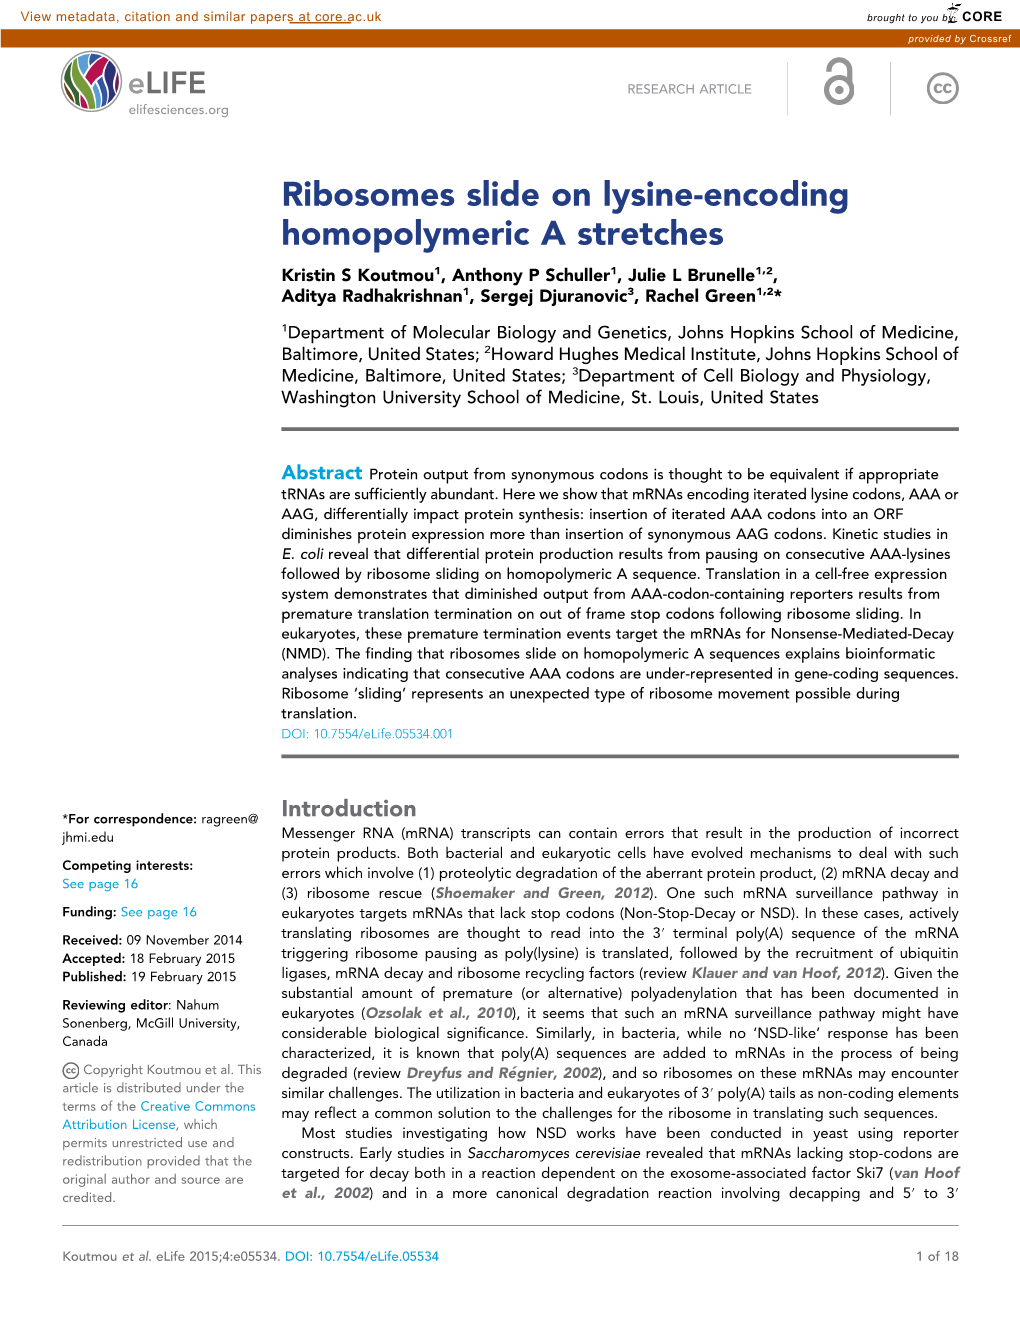 Ribosomes Slide on Lysine-Encoding Homopolymeric a Stretches